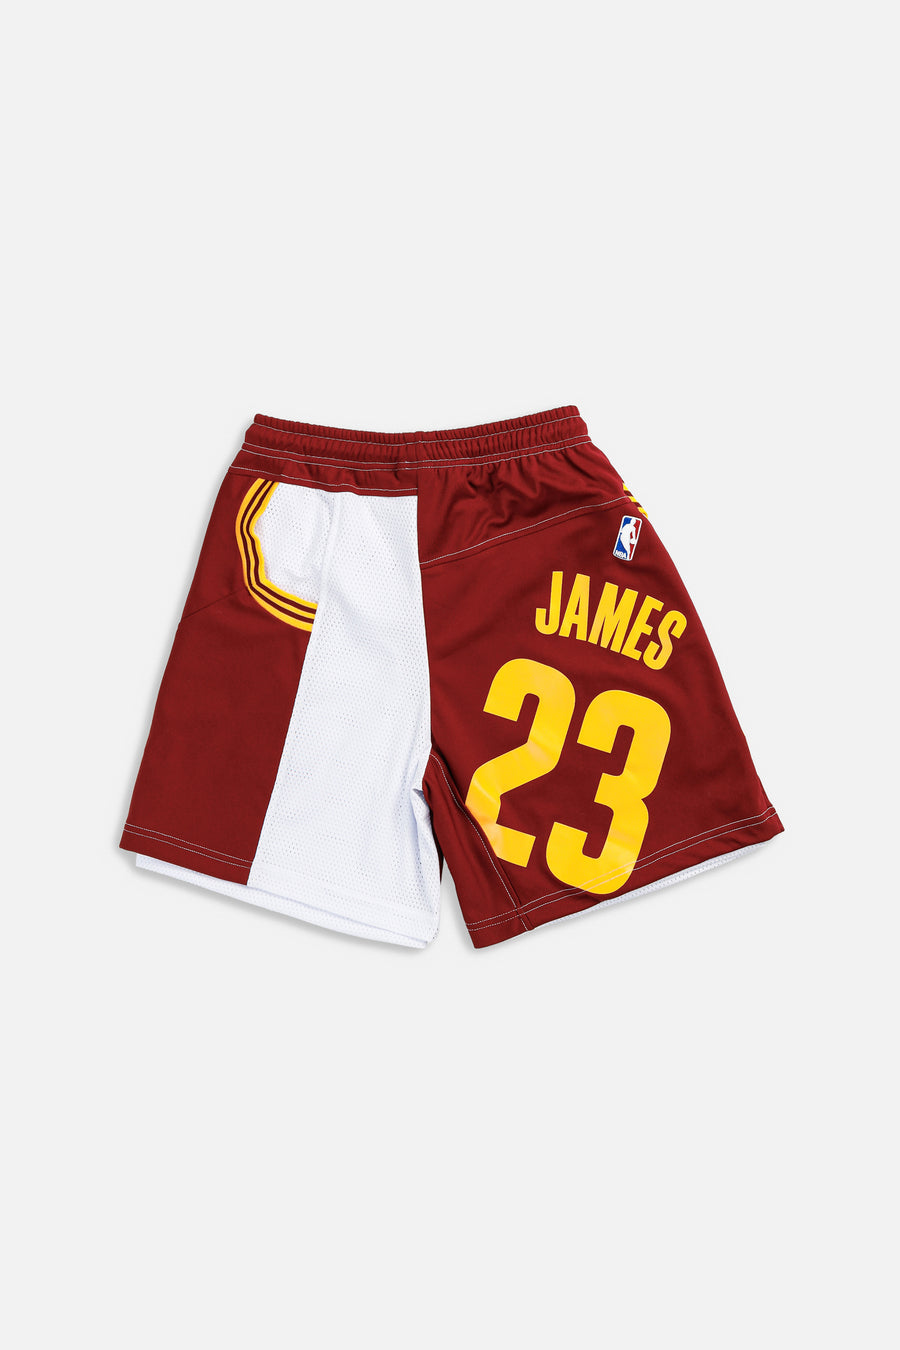 Unisex Rework Cleveland Cavaliers NBA Jersey Shorts - S